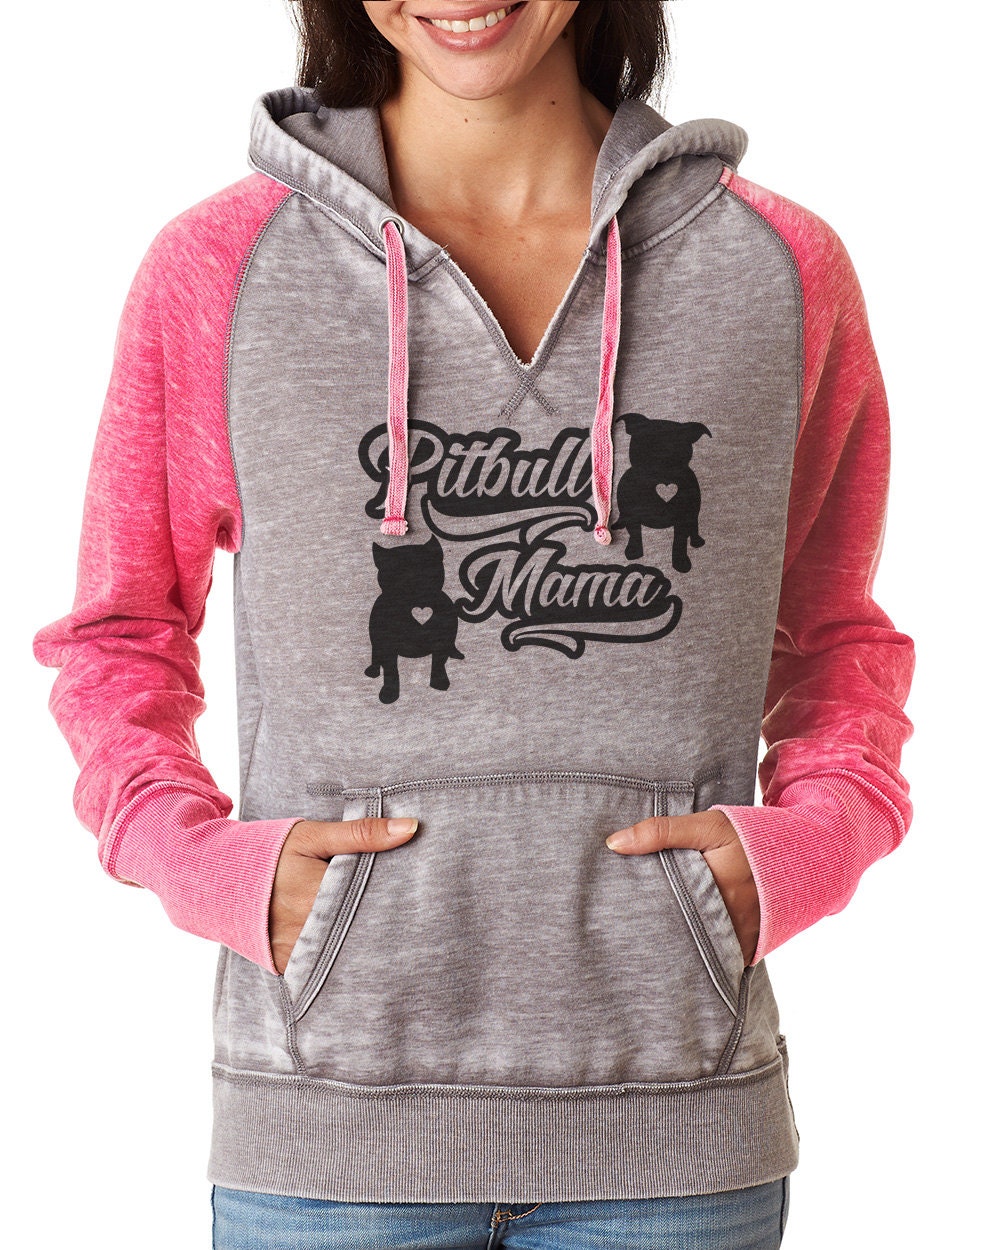 Bandana pink Pitbull mom strong mom shirt, hoodie, sweater